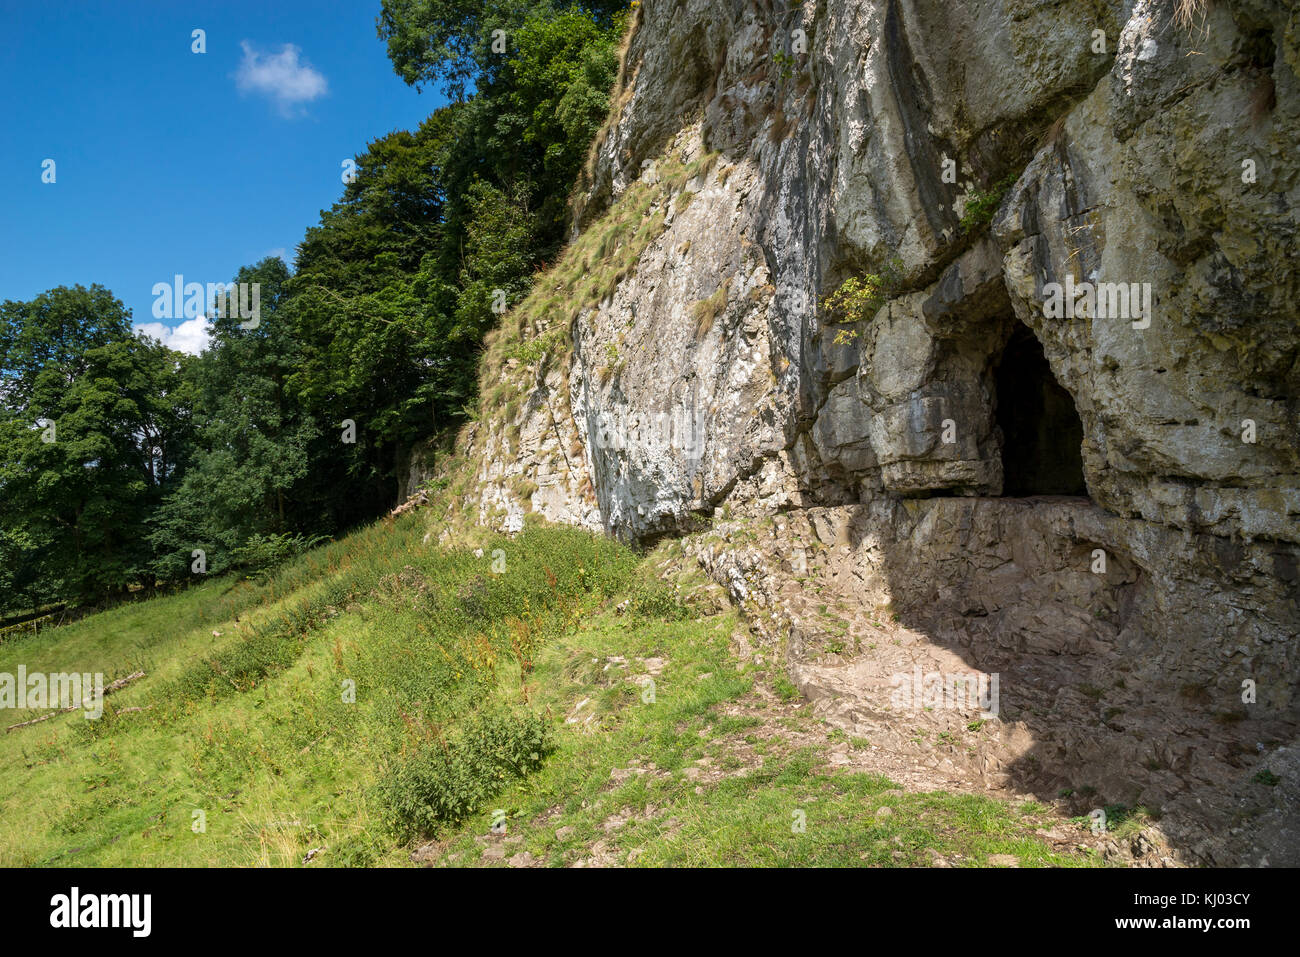 Small cave in a limestone cliff in Beresford Dale near Hartington, Peak District, England. Stock Photo